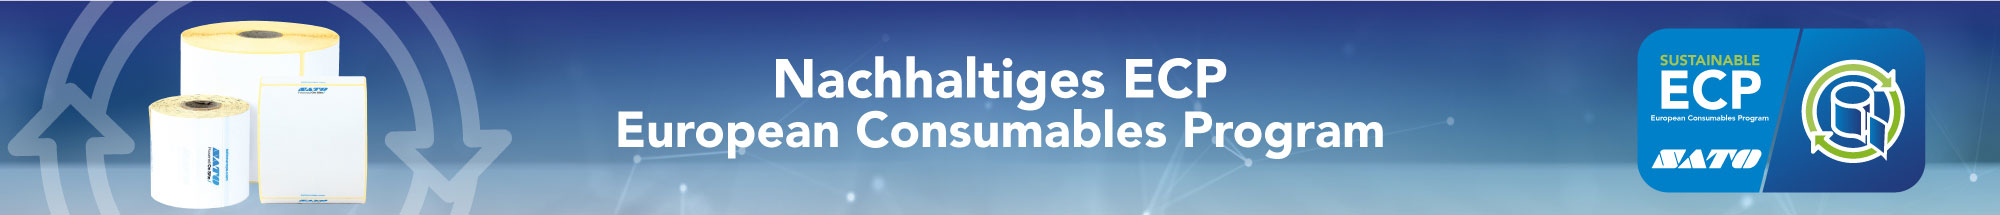 Sustainable European Consumables Program